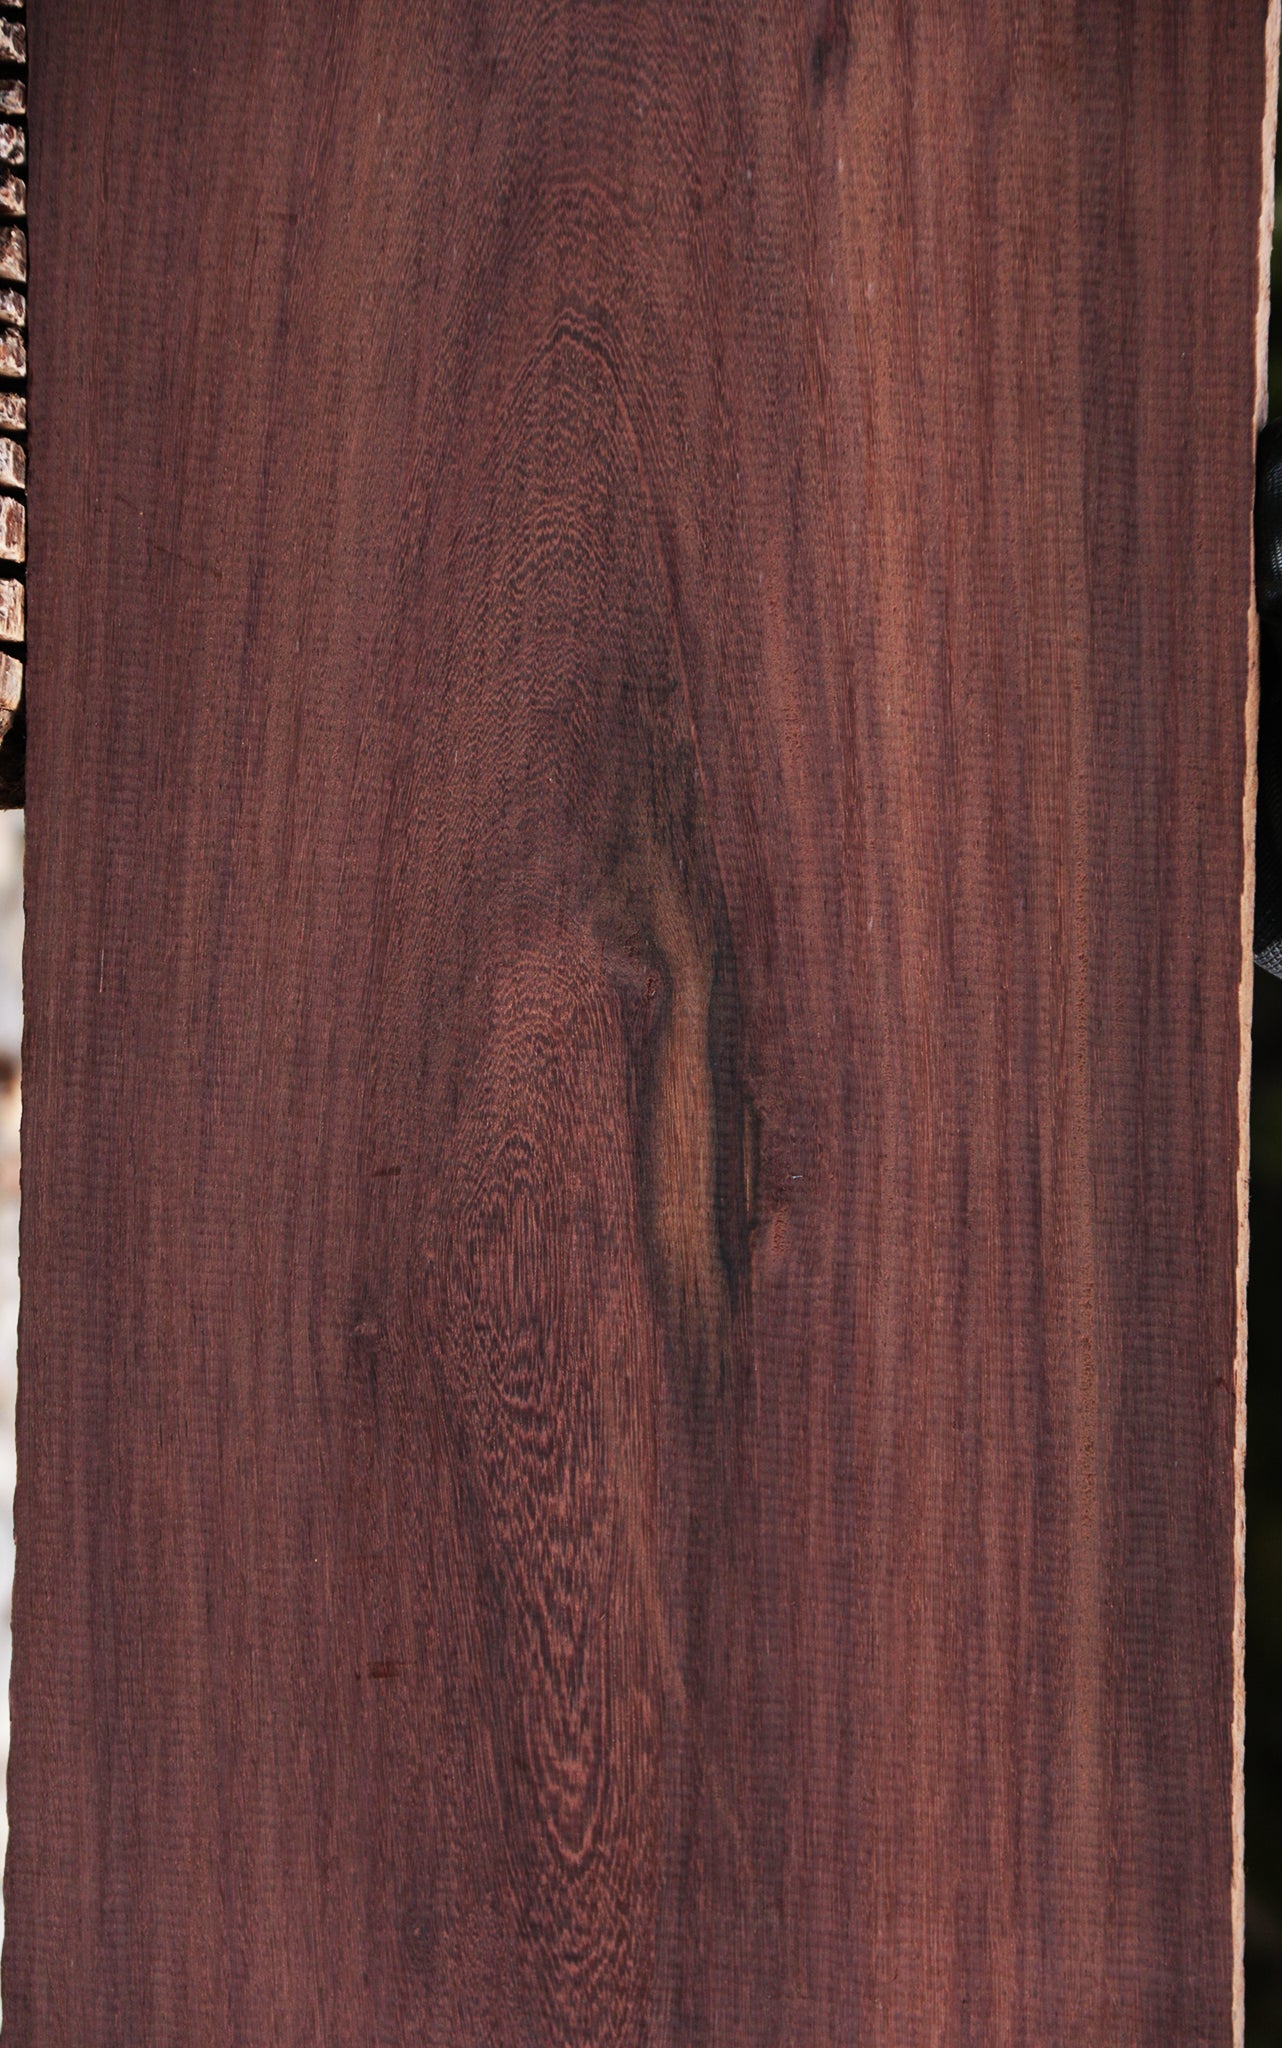 Katalox Lumber